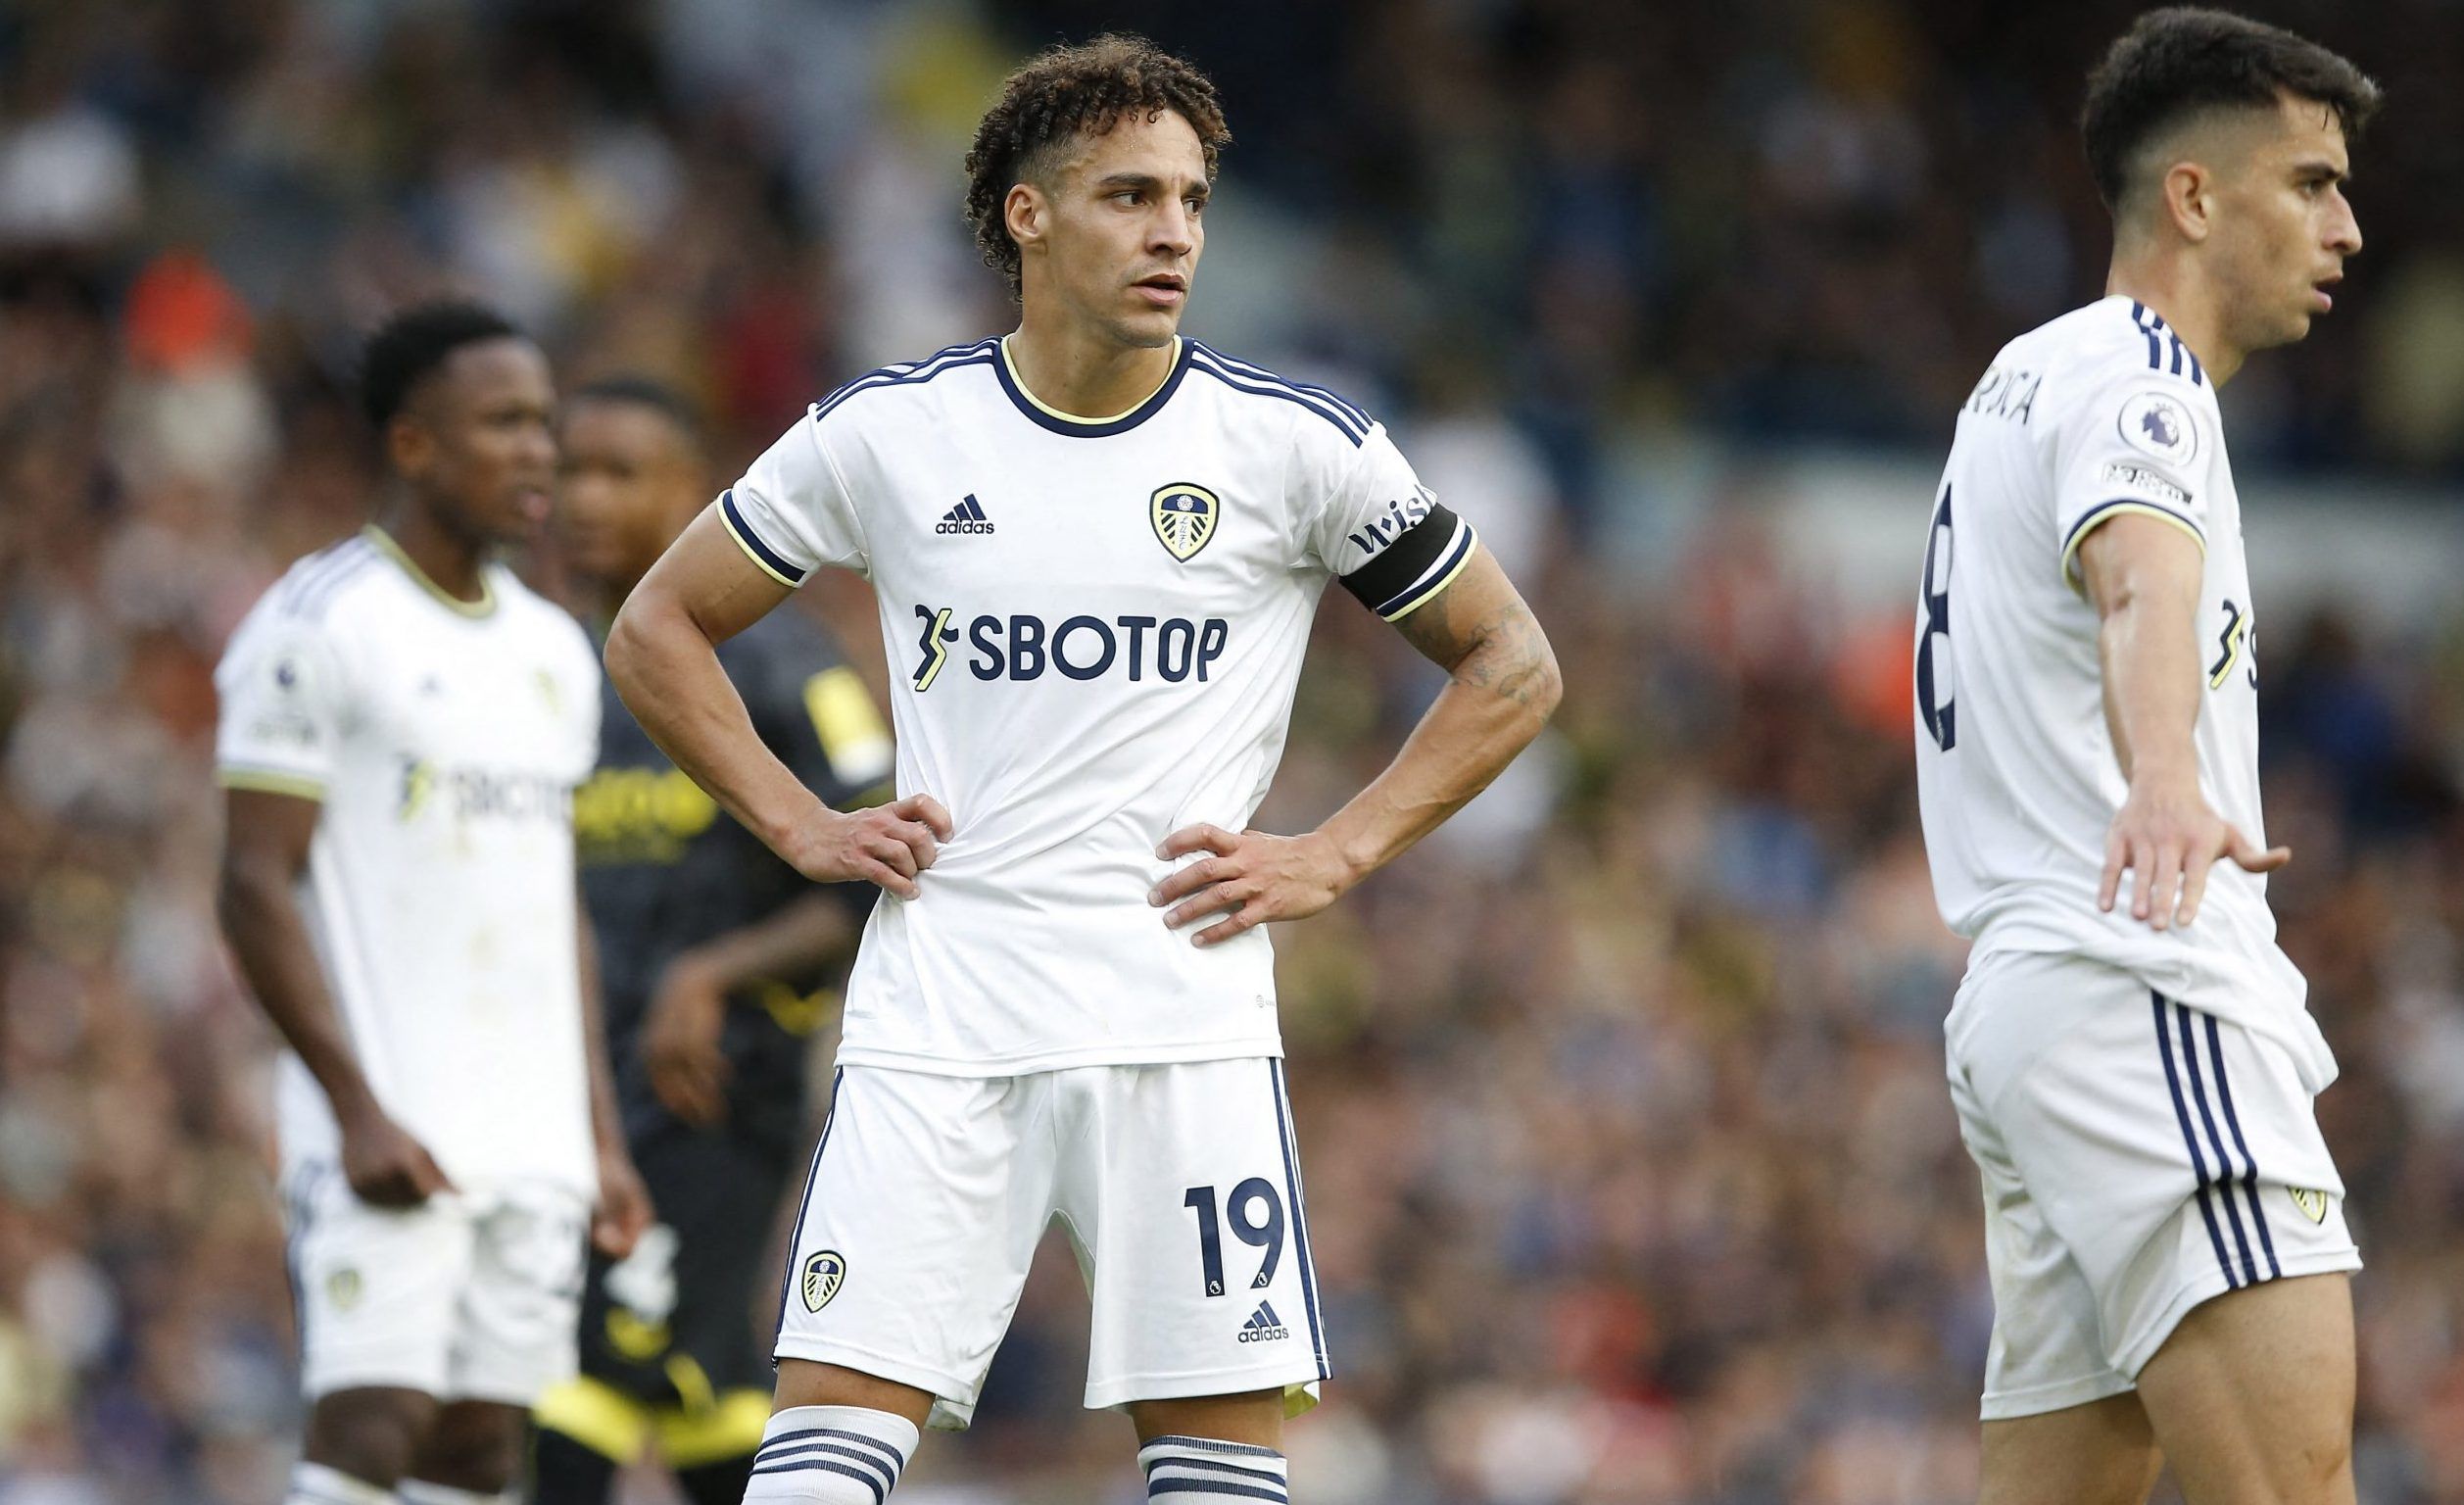 Leeds United forward Rodrigo looks on vs Aston Villa